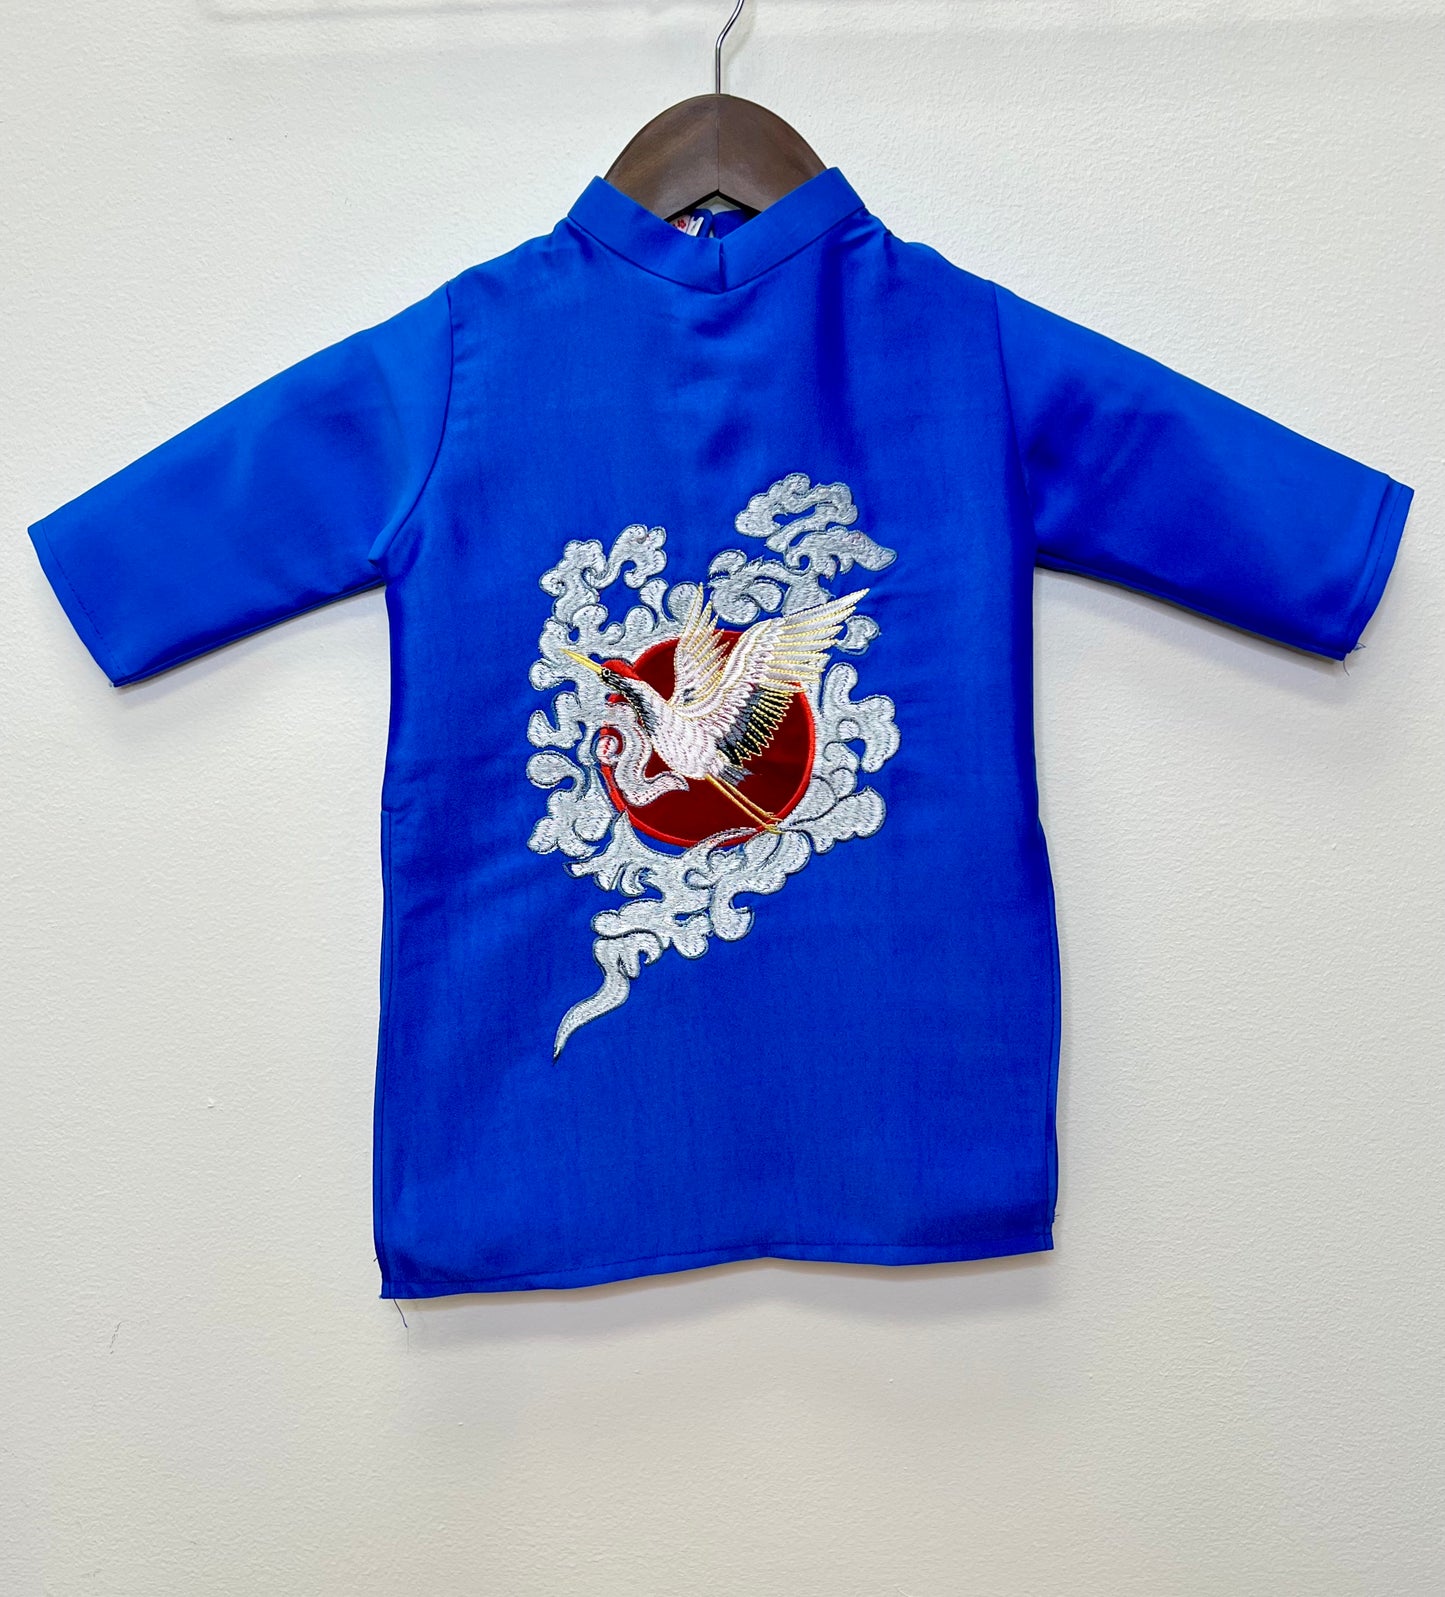 962-Embroidered Boy’s Áo Dài royal blue. Final sale (no return/exchange)